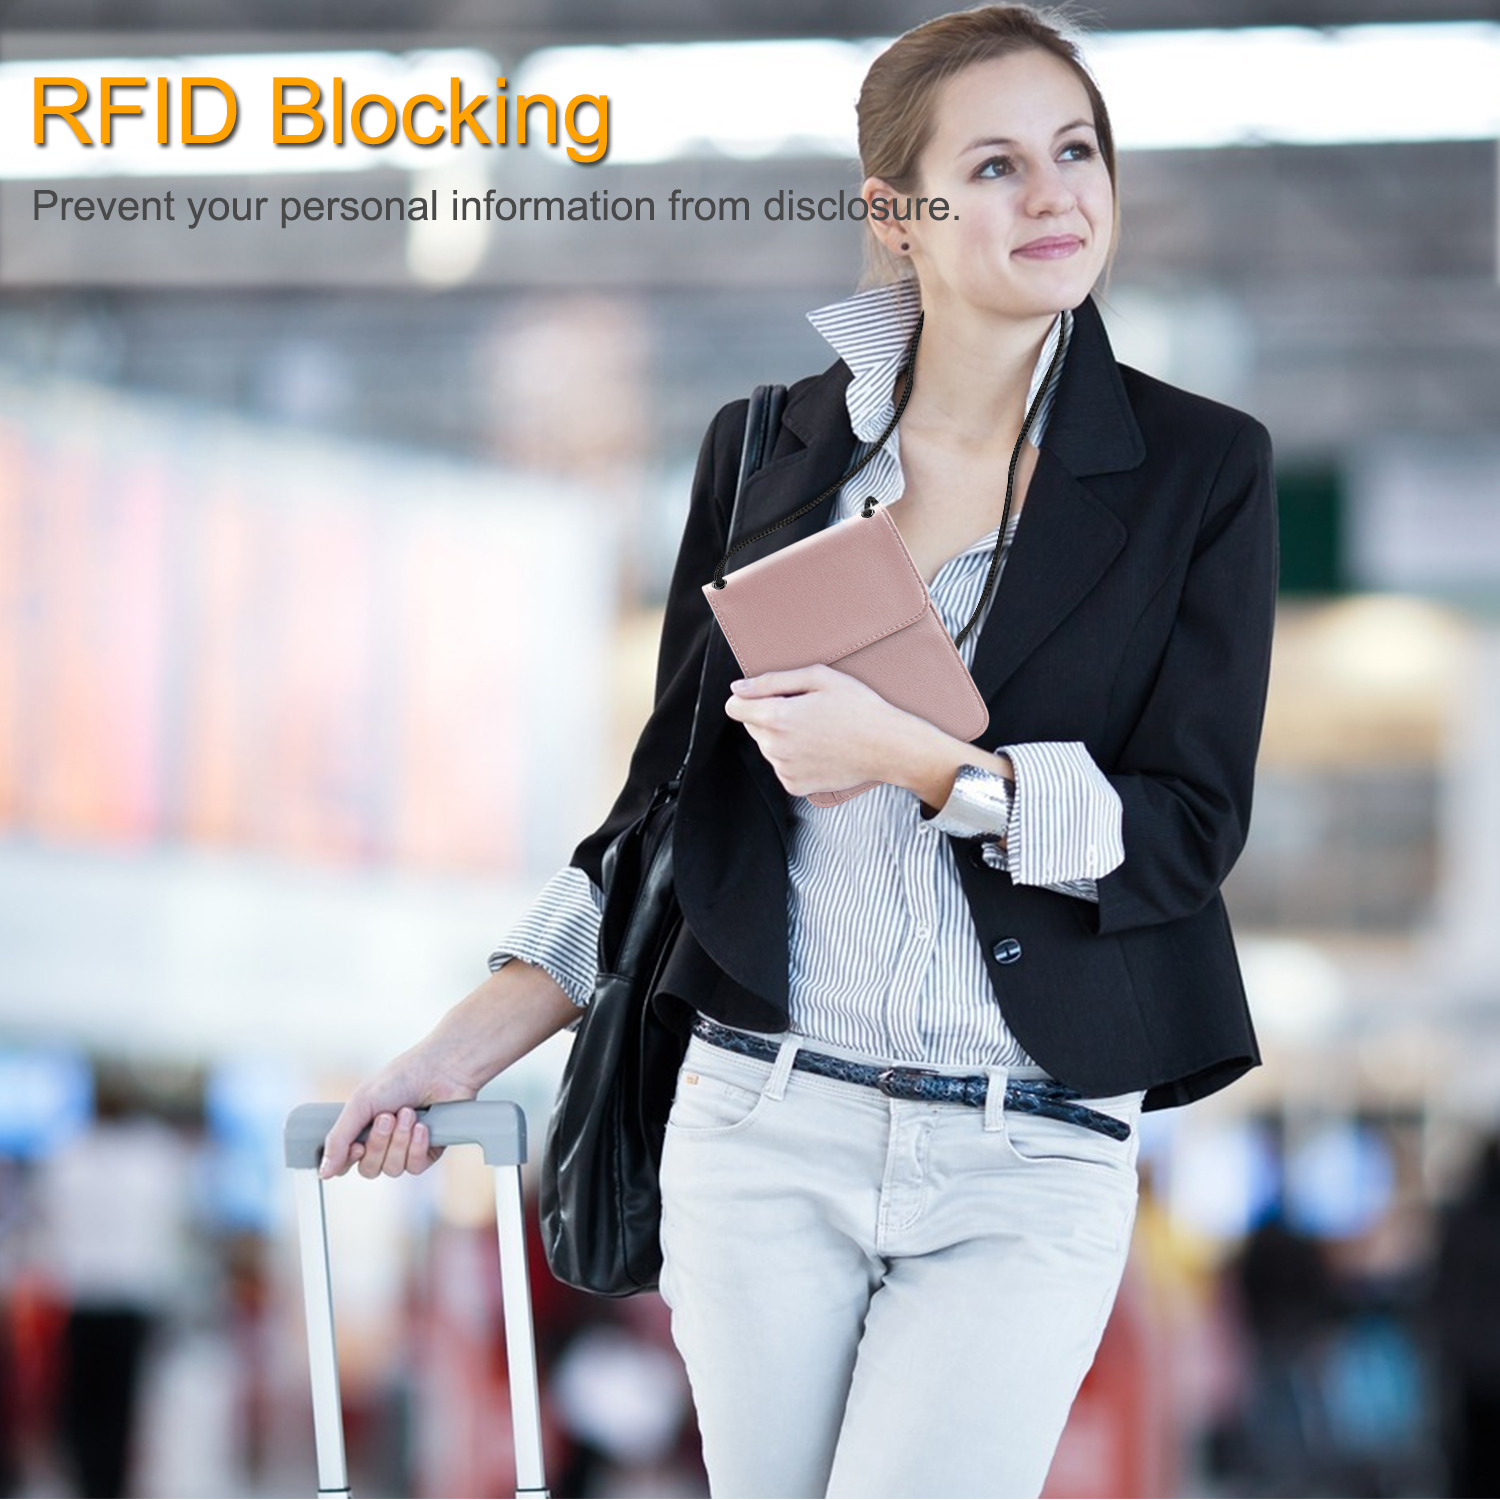 Fintie Passport Holder Neck Pouch [RFID Blocking] Premium PU Leather Travel Wallet, Rose Gold - image 2 of 7